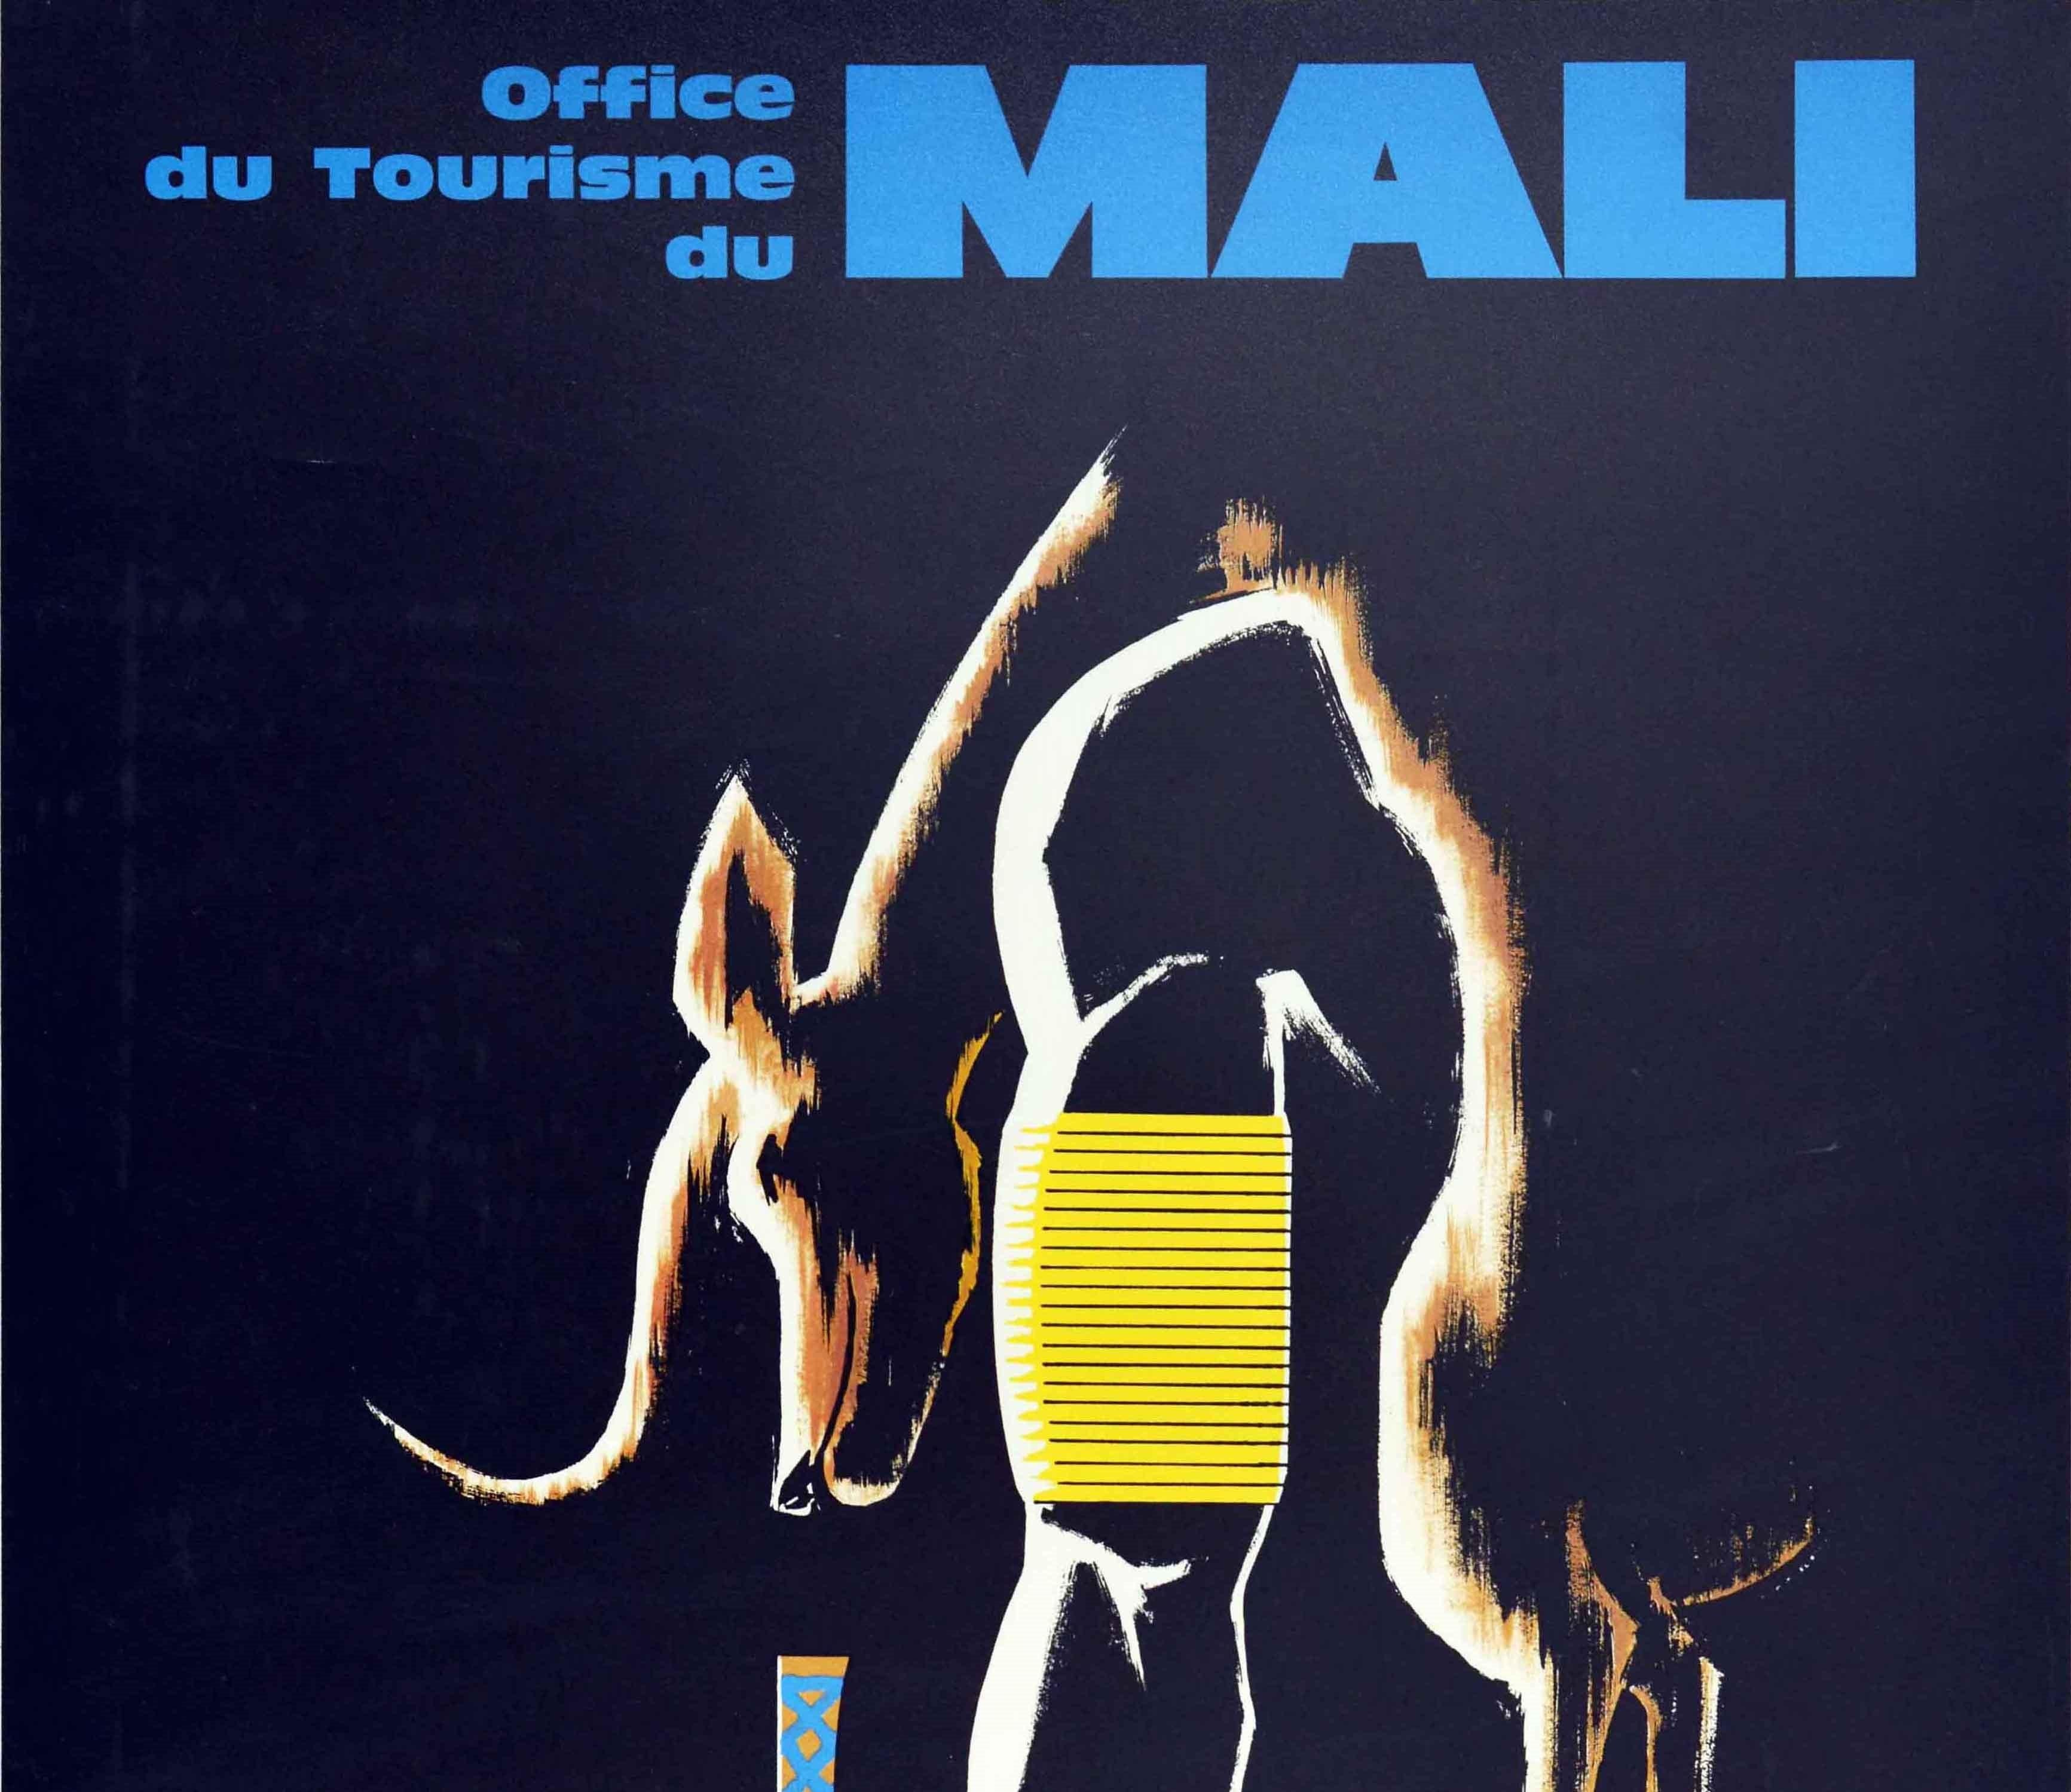 Original Vintage Travel Poster Mali West Africa Office Du Tourisme Hunter Design - Print by Drouard